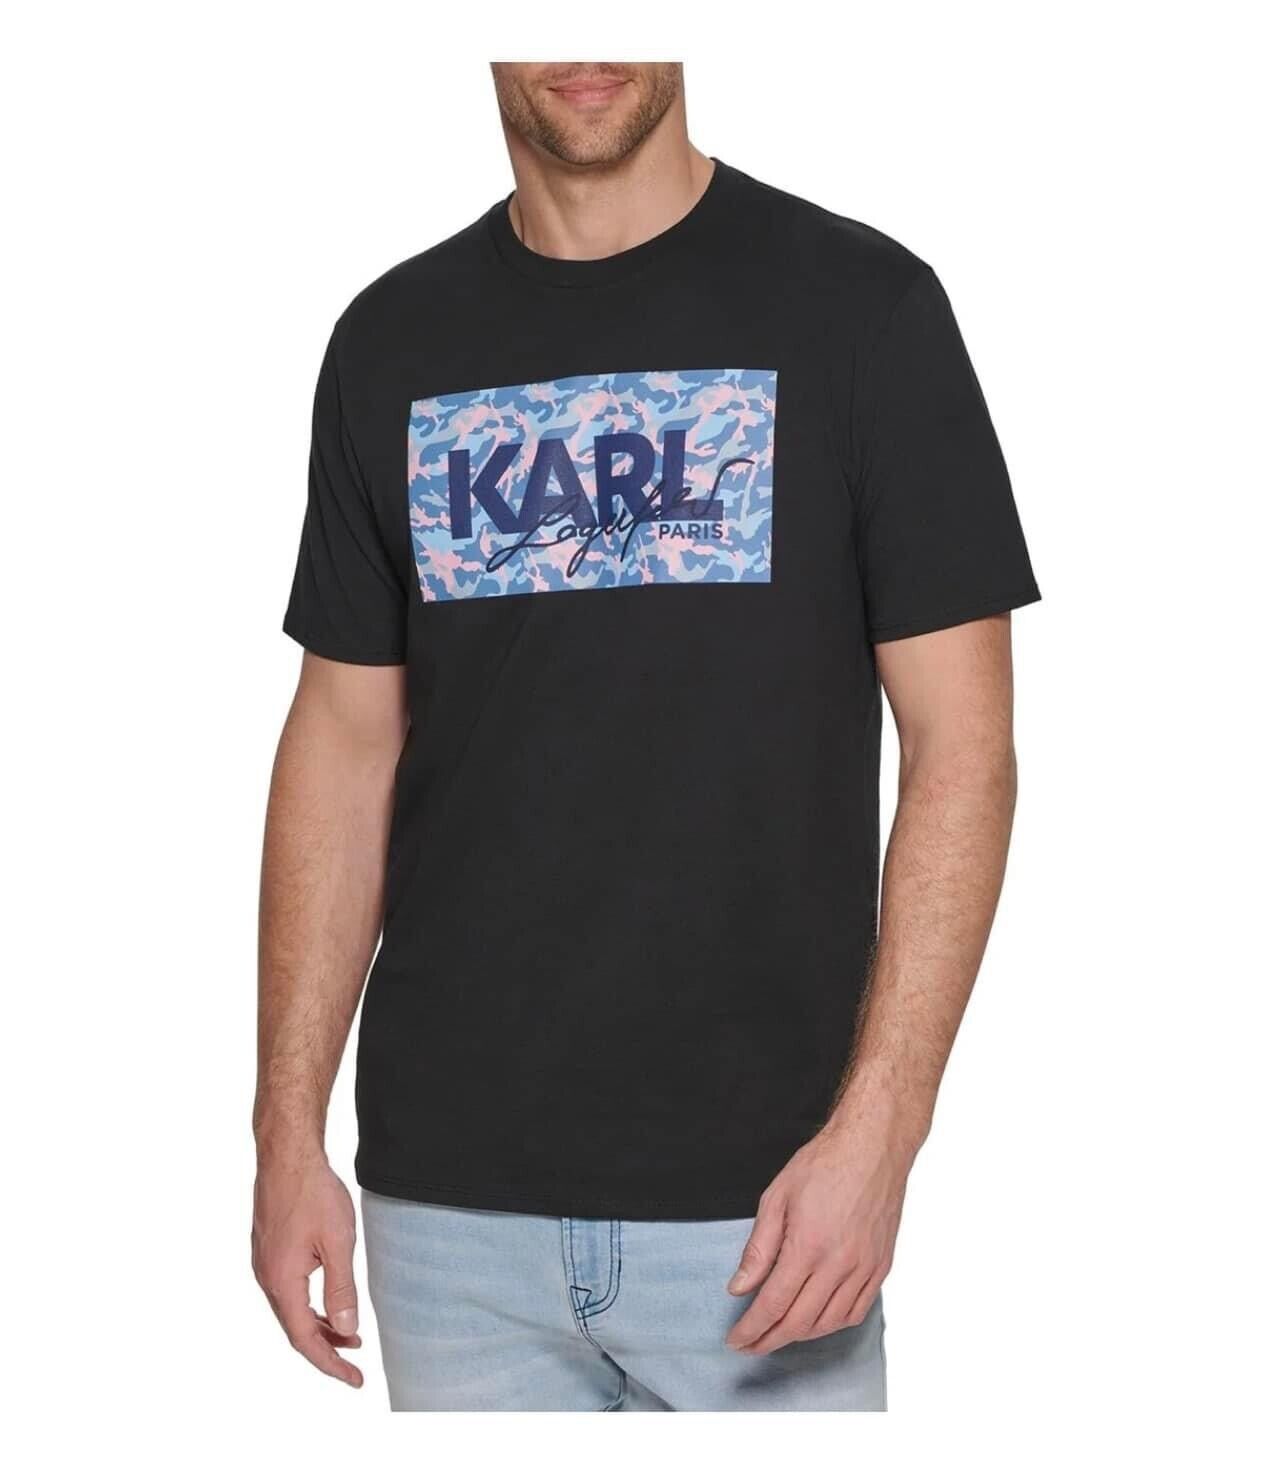 KARL LAGERFELD PARIS Men's Tshirt Tee Black Size L Large